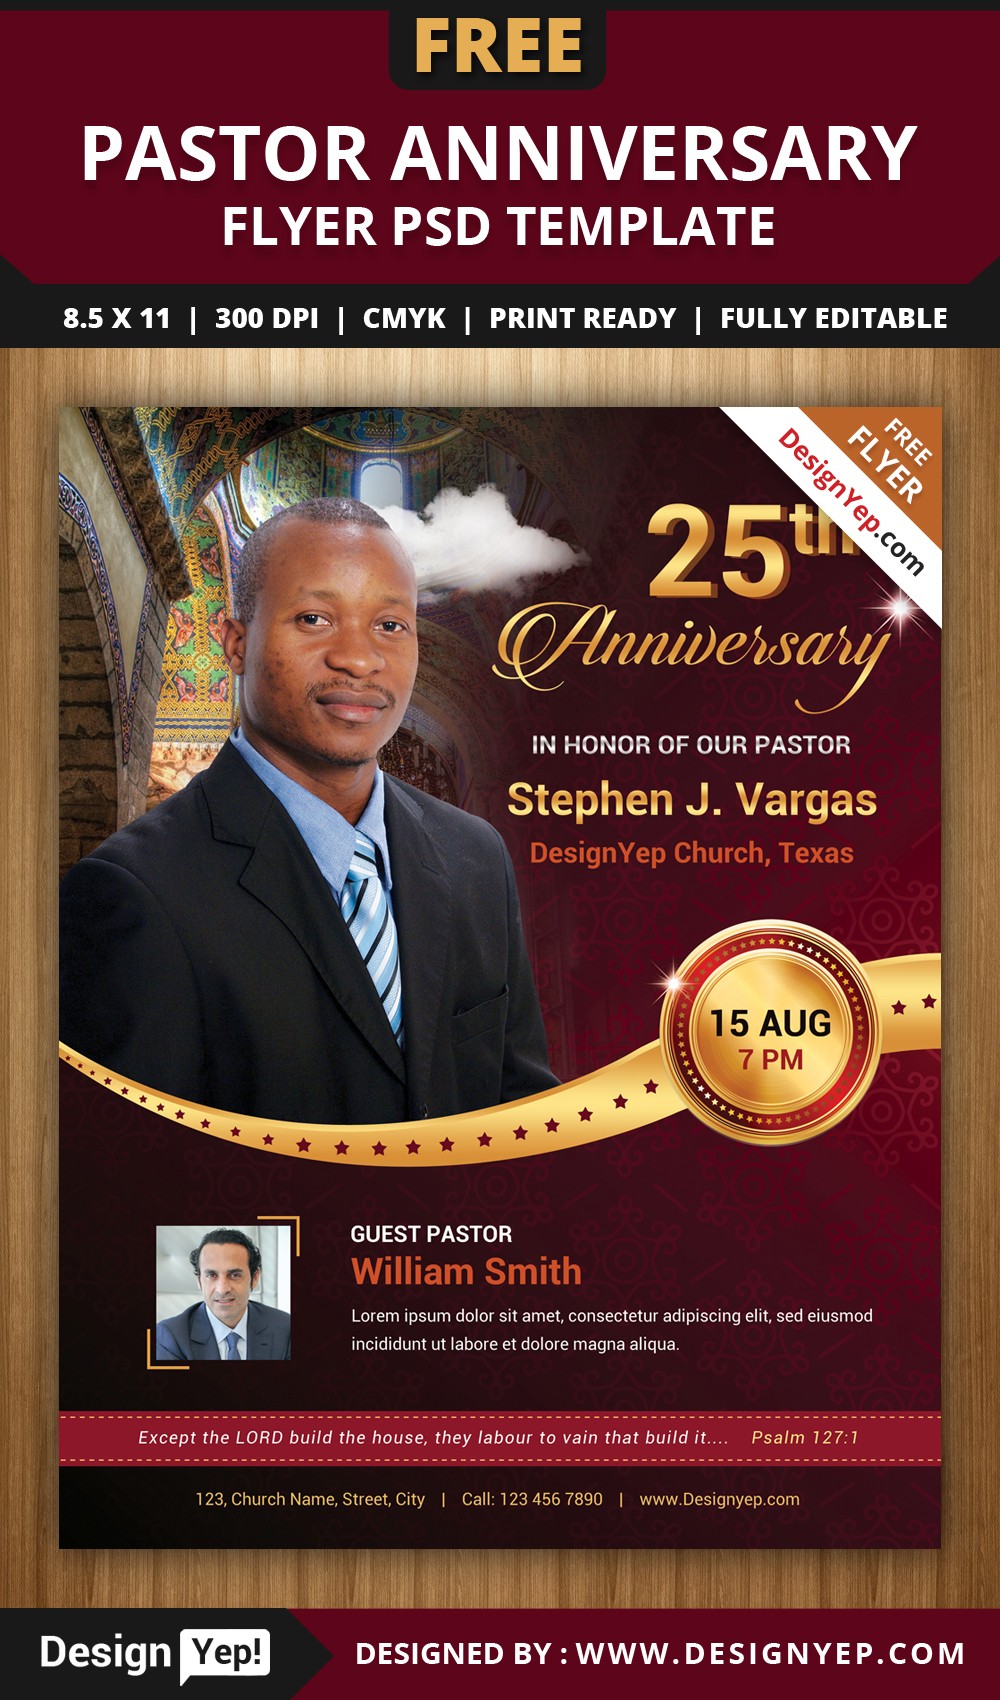 Free Pastor Anniversary Flyer PSD Template On Behance Church Psd